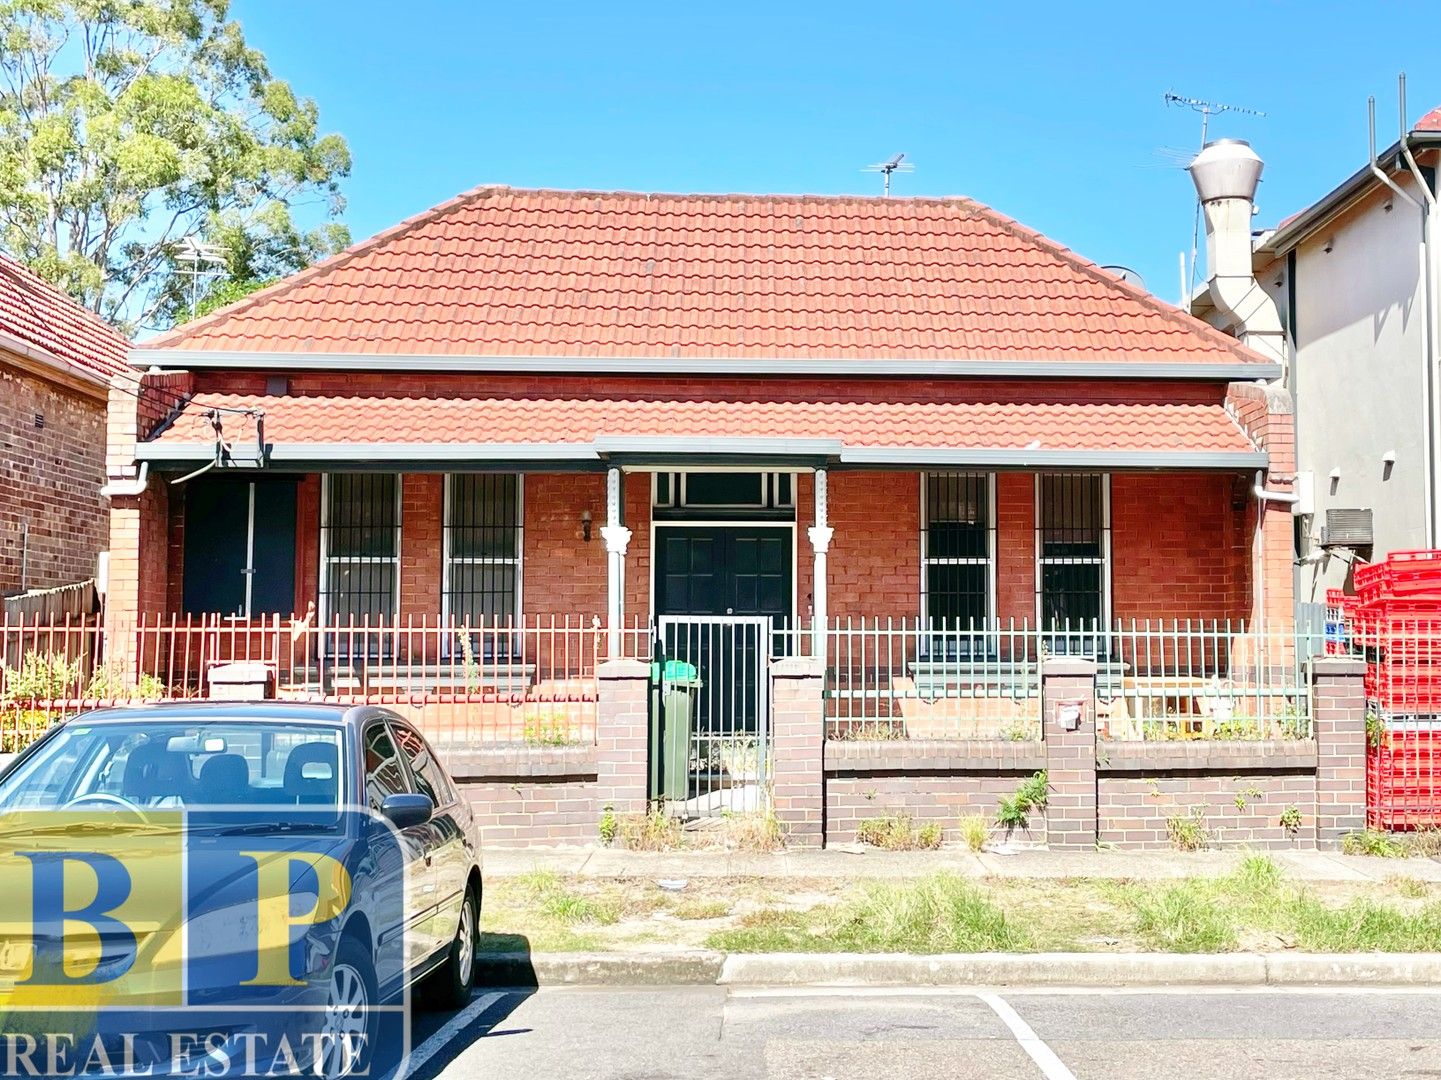 3 bedrooms House in 1/4/Bowral St Bowral st KENSINGTON NSW, 2033